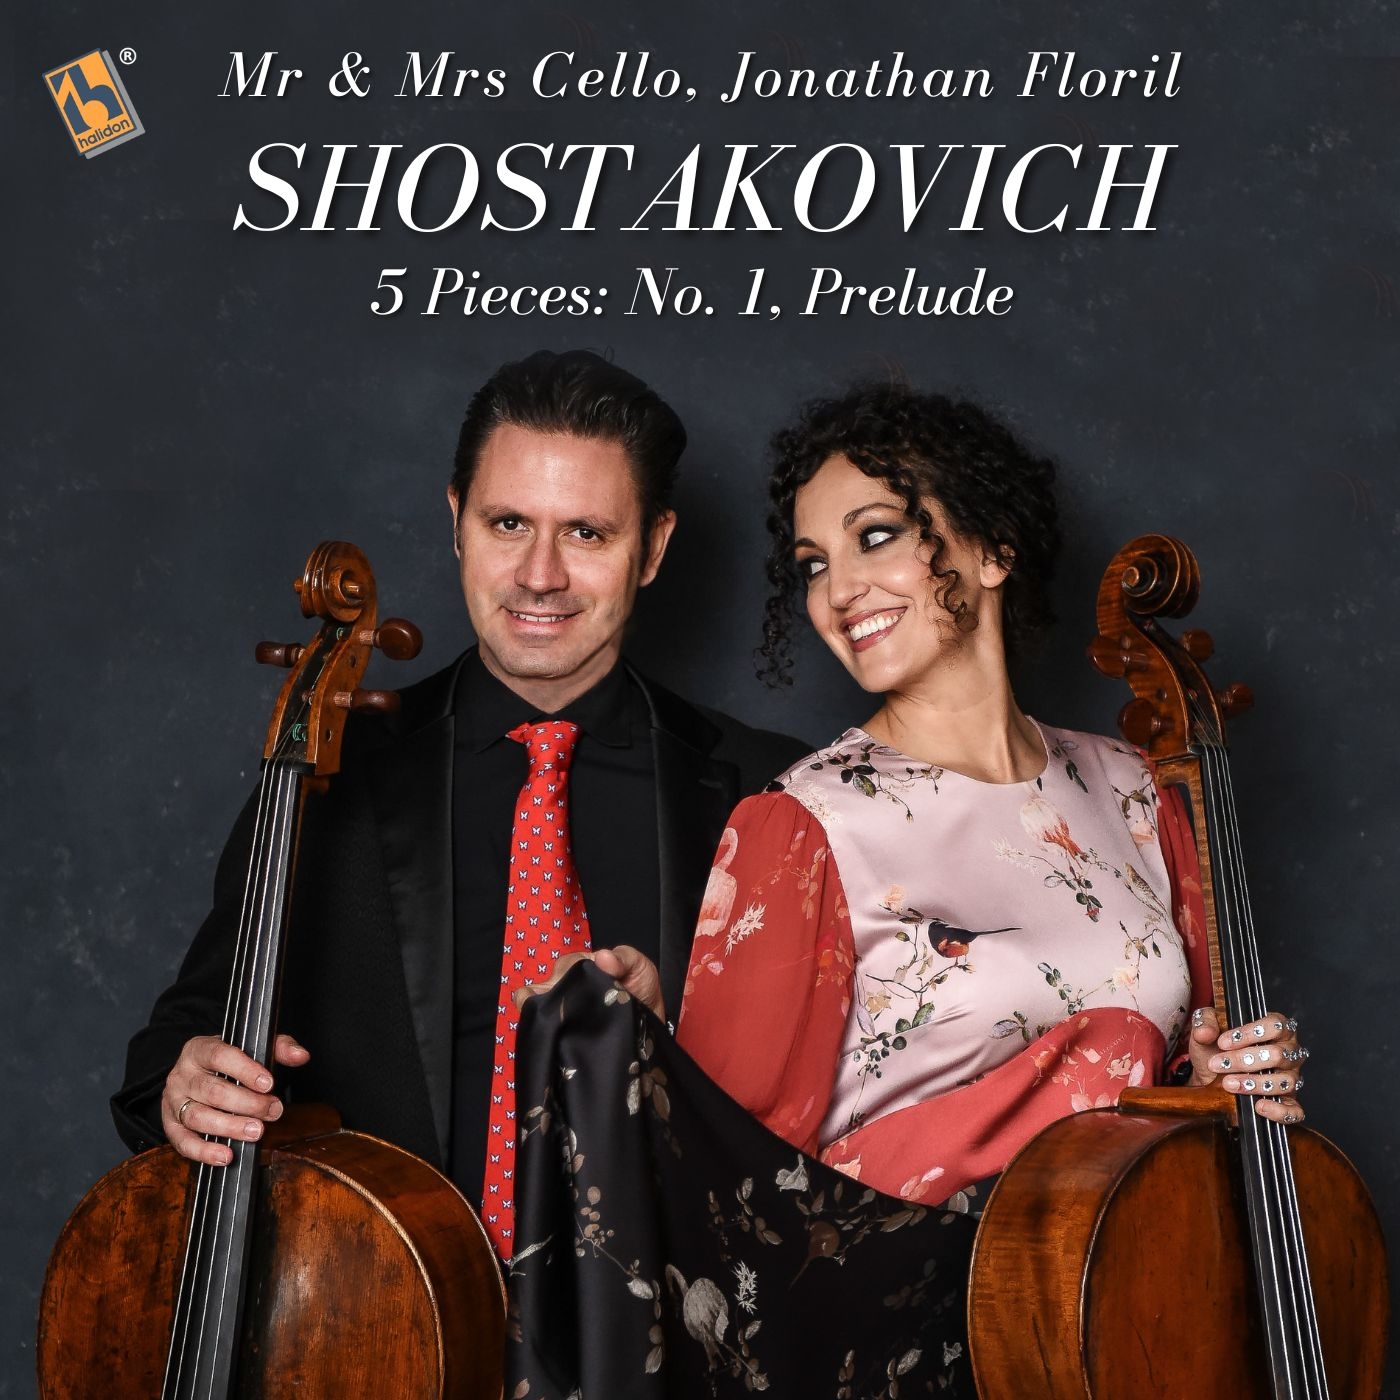 Shostakovich: 5 Pieces for 2 Violins and Piano: No. 1, Prelude (Transcr. for 2 Cellos and Piano by Patricia De Carli)